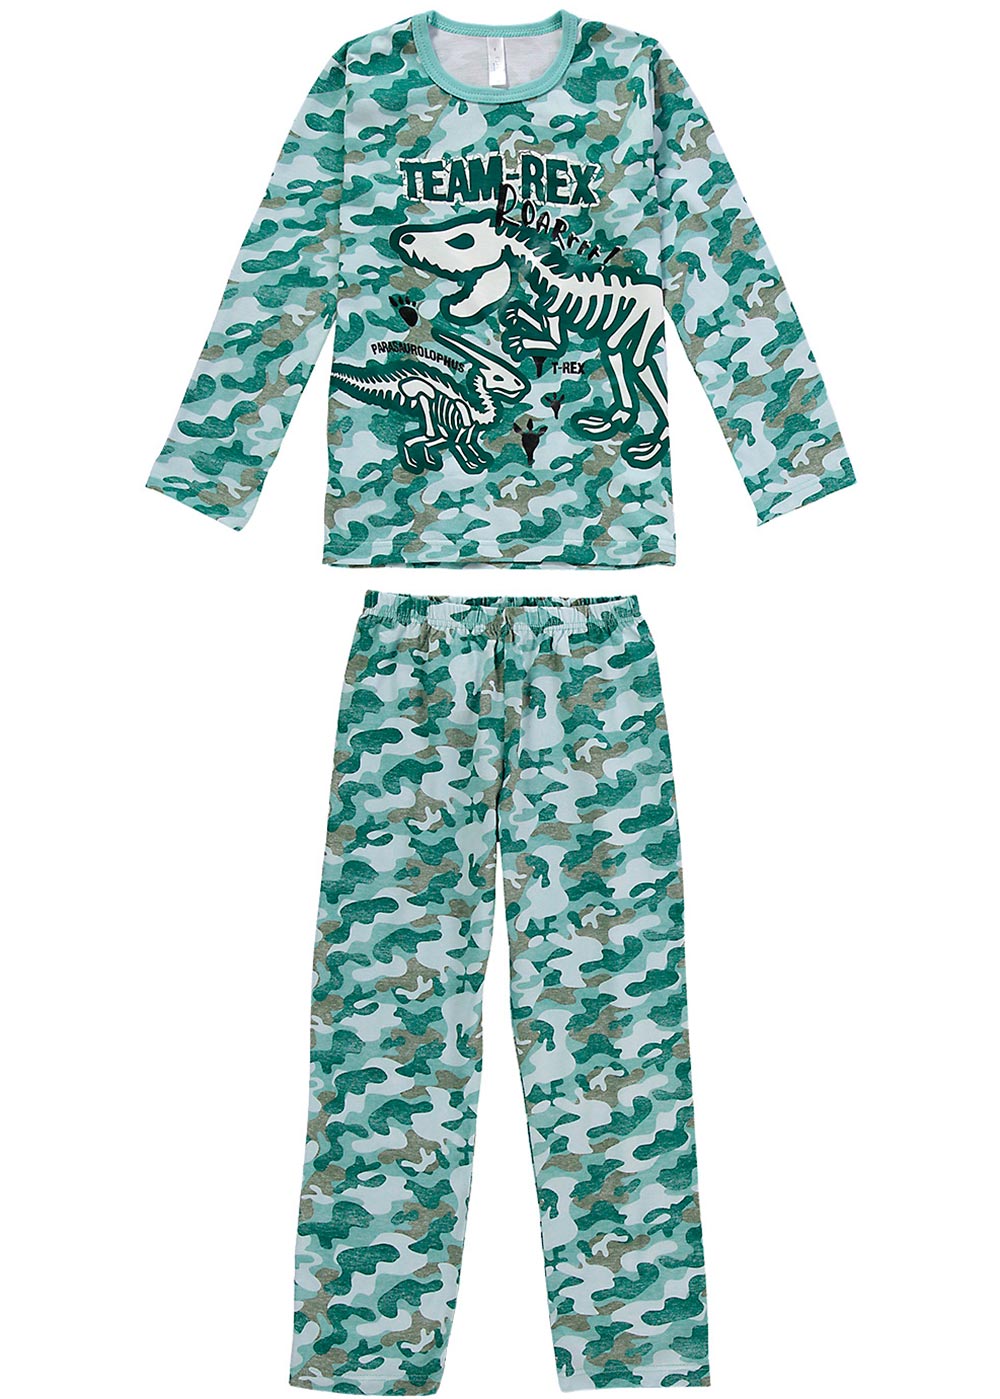 Pijama Infantil Masculino Inverno Verde Team Rex - Malwee